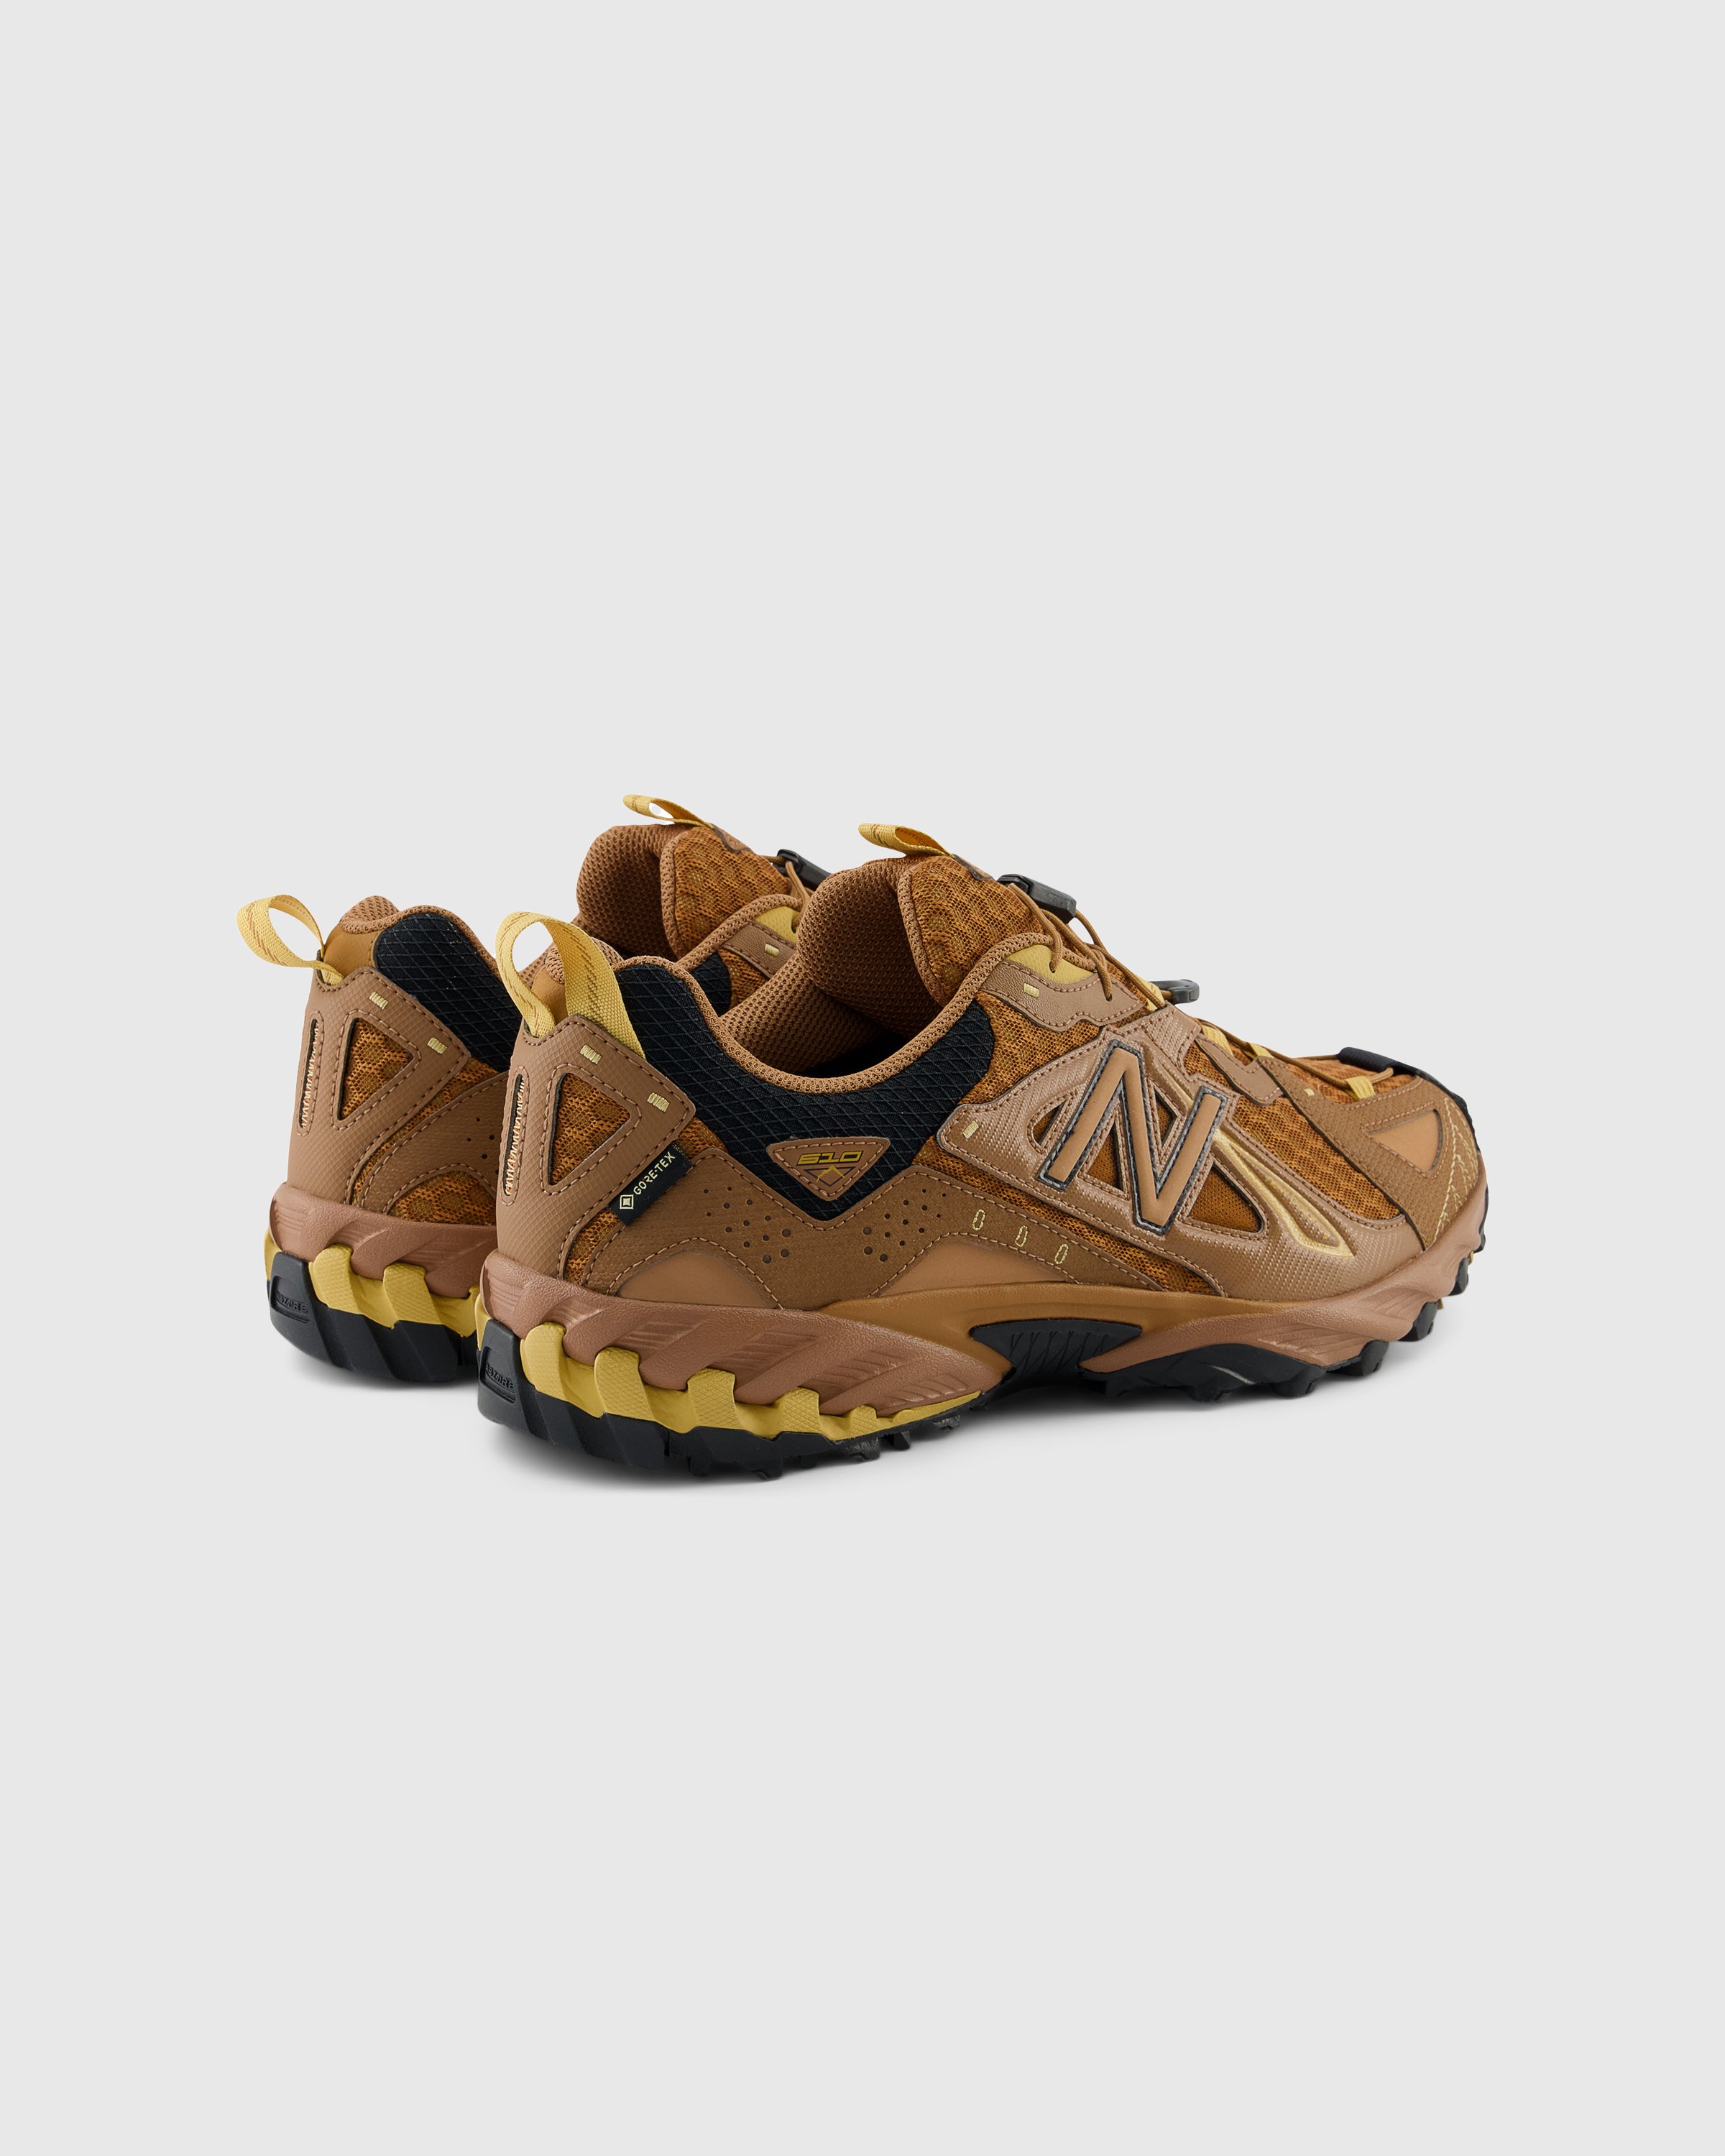 New Balance - ML610XH BROWN - Footwear - Brown - Image 4